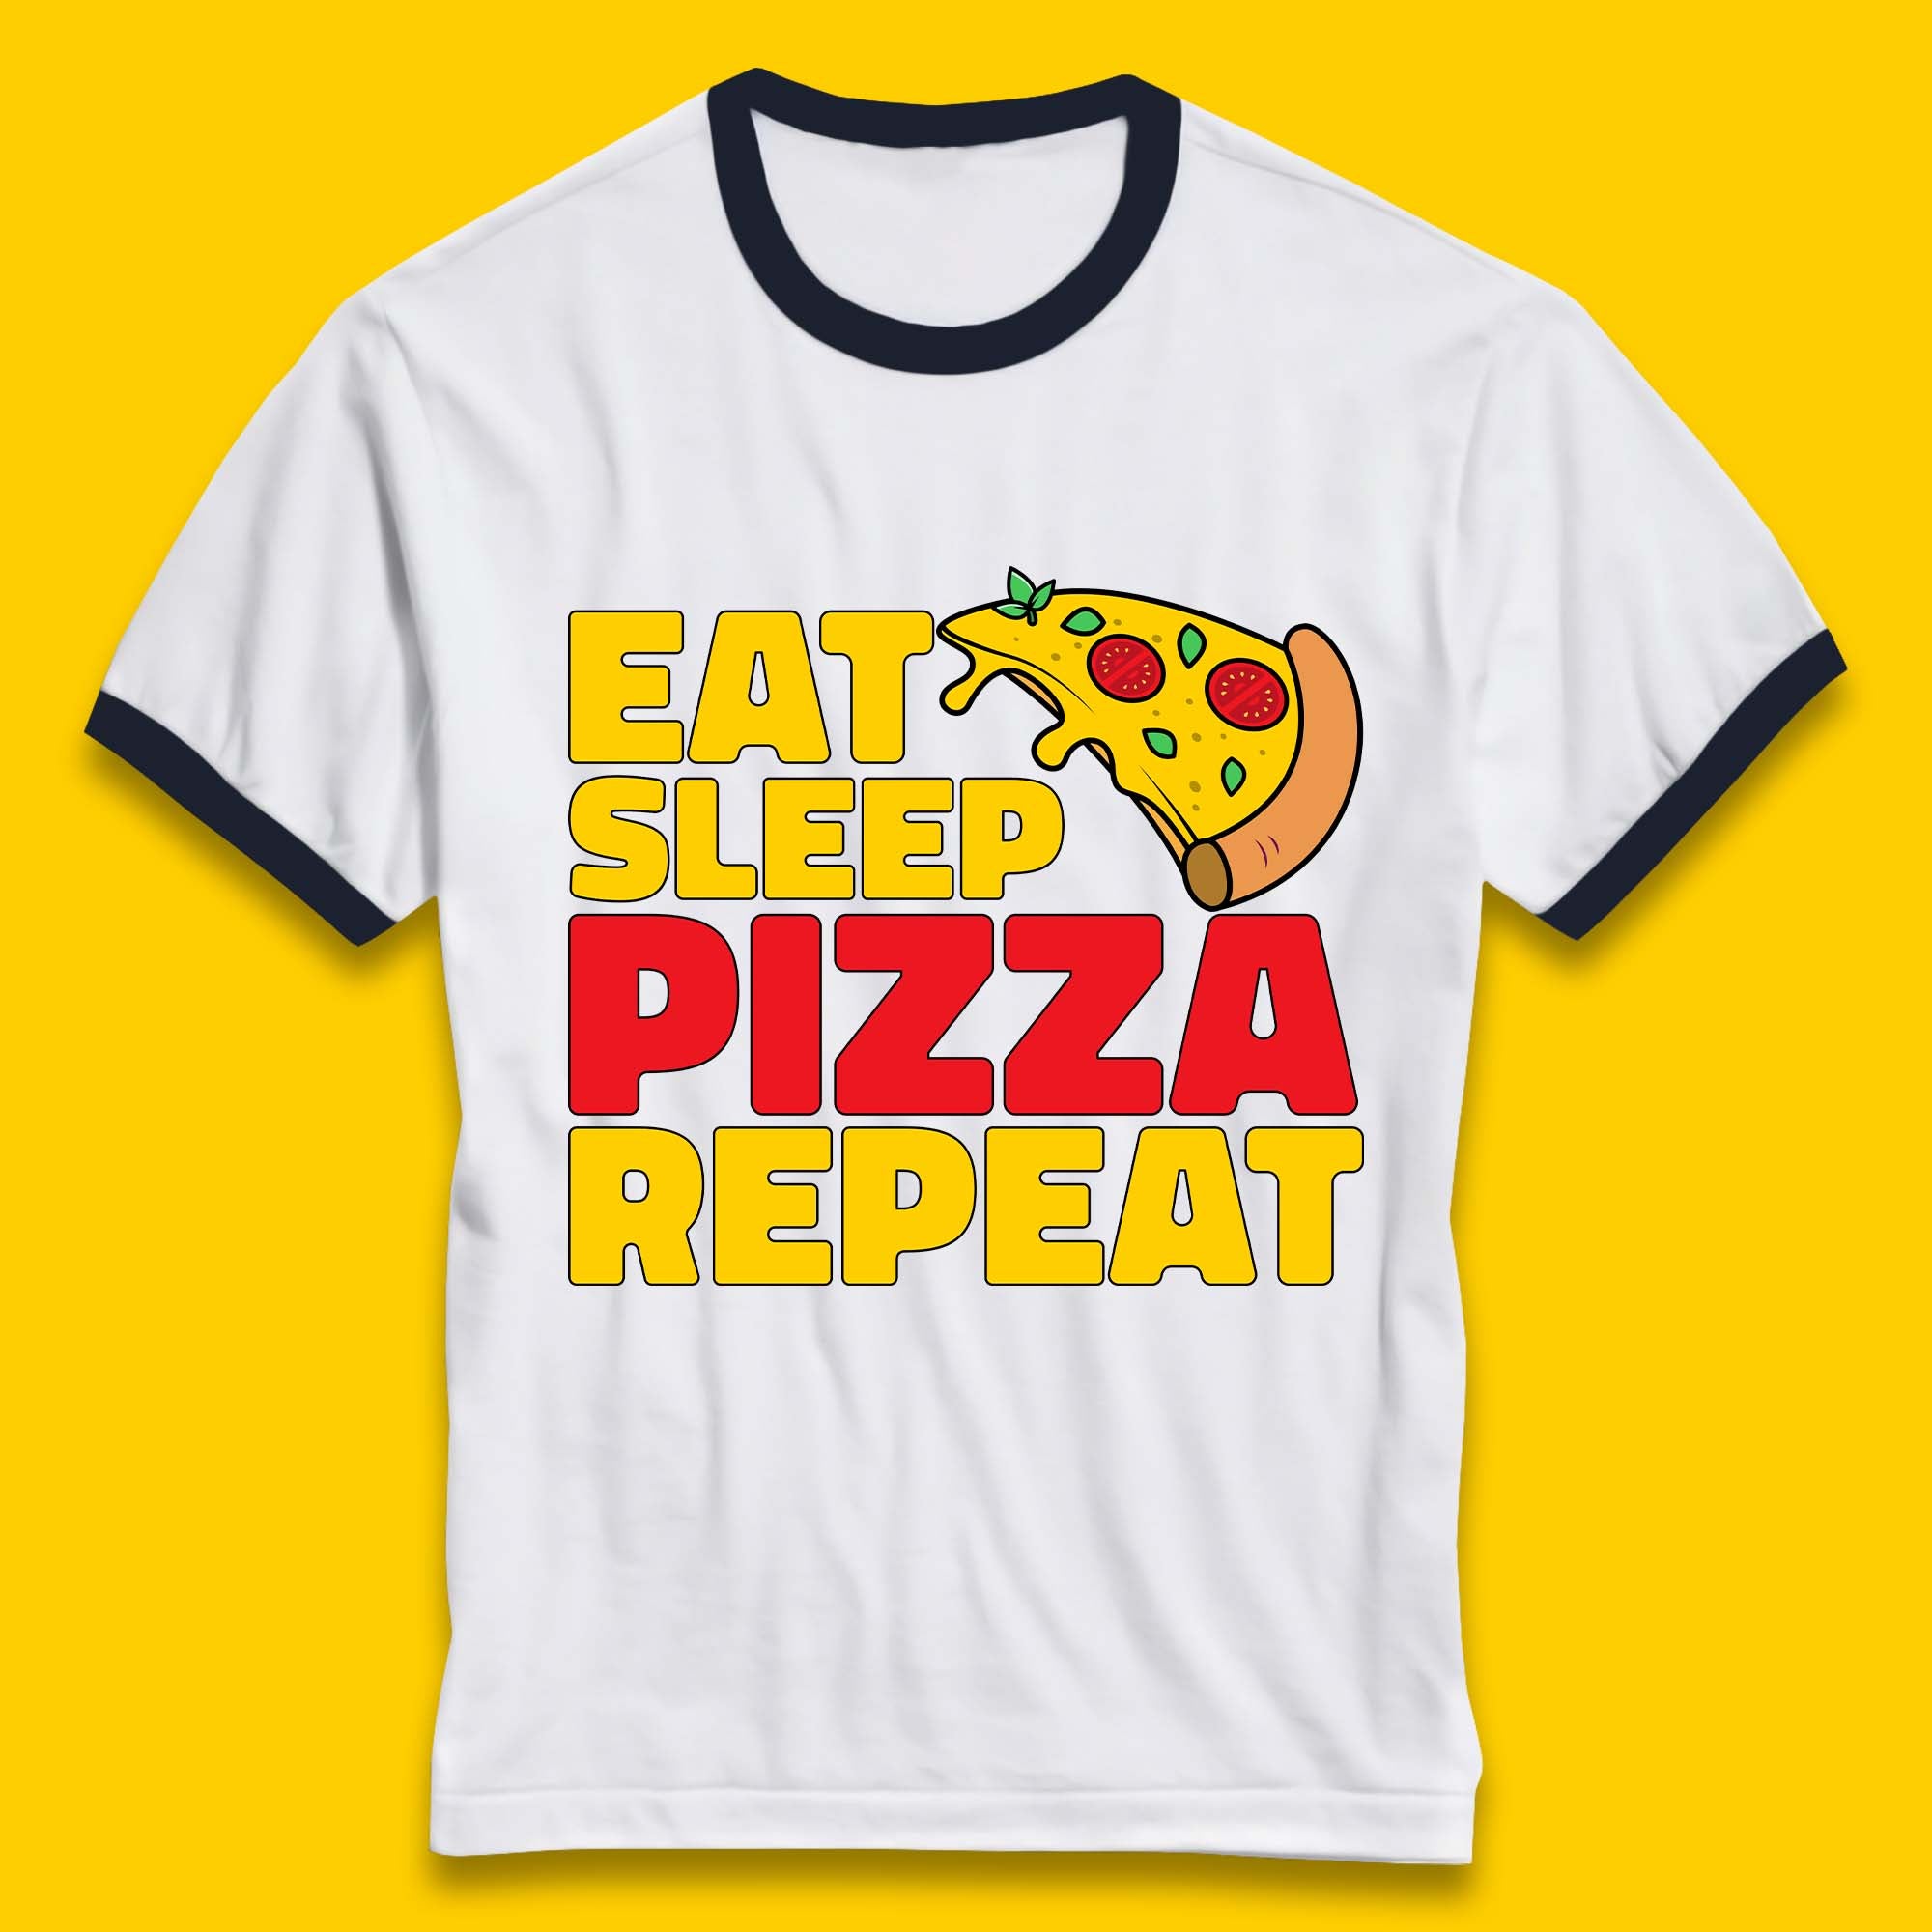 Eat Sleep Pizza Repeat Ringer T-Shirt